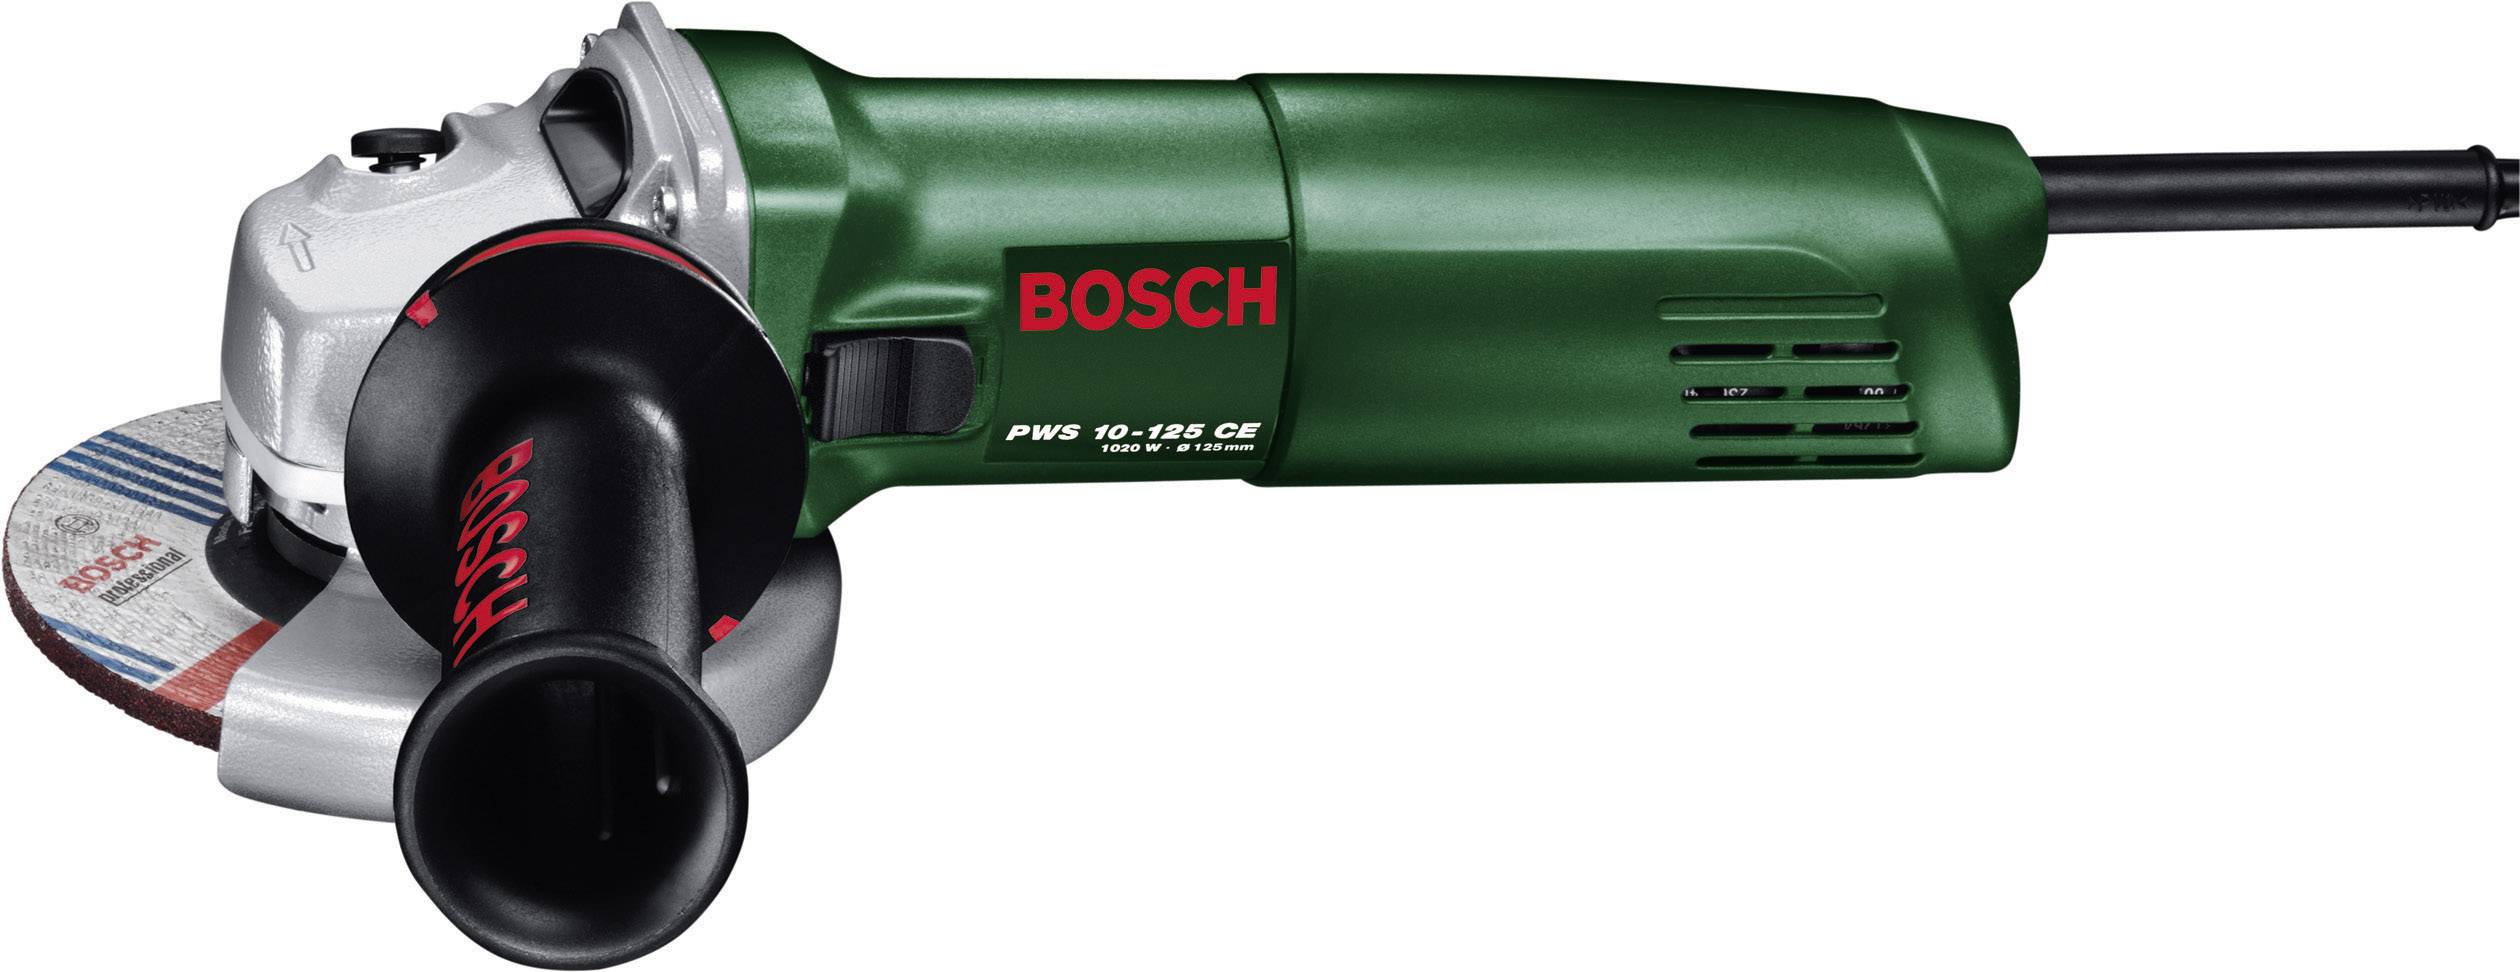 Pws 650 125. Шлифмашинка Bosch 40х150. Угловая шлифмашина Bosch PWS 8-125 ce. Ручка для Bosch PWS 8-125 ce. Bosch PWS 650-125 06034110r0.